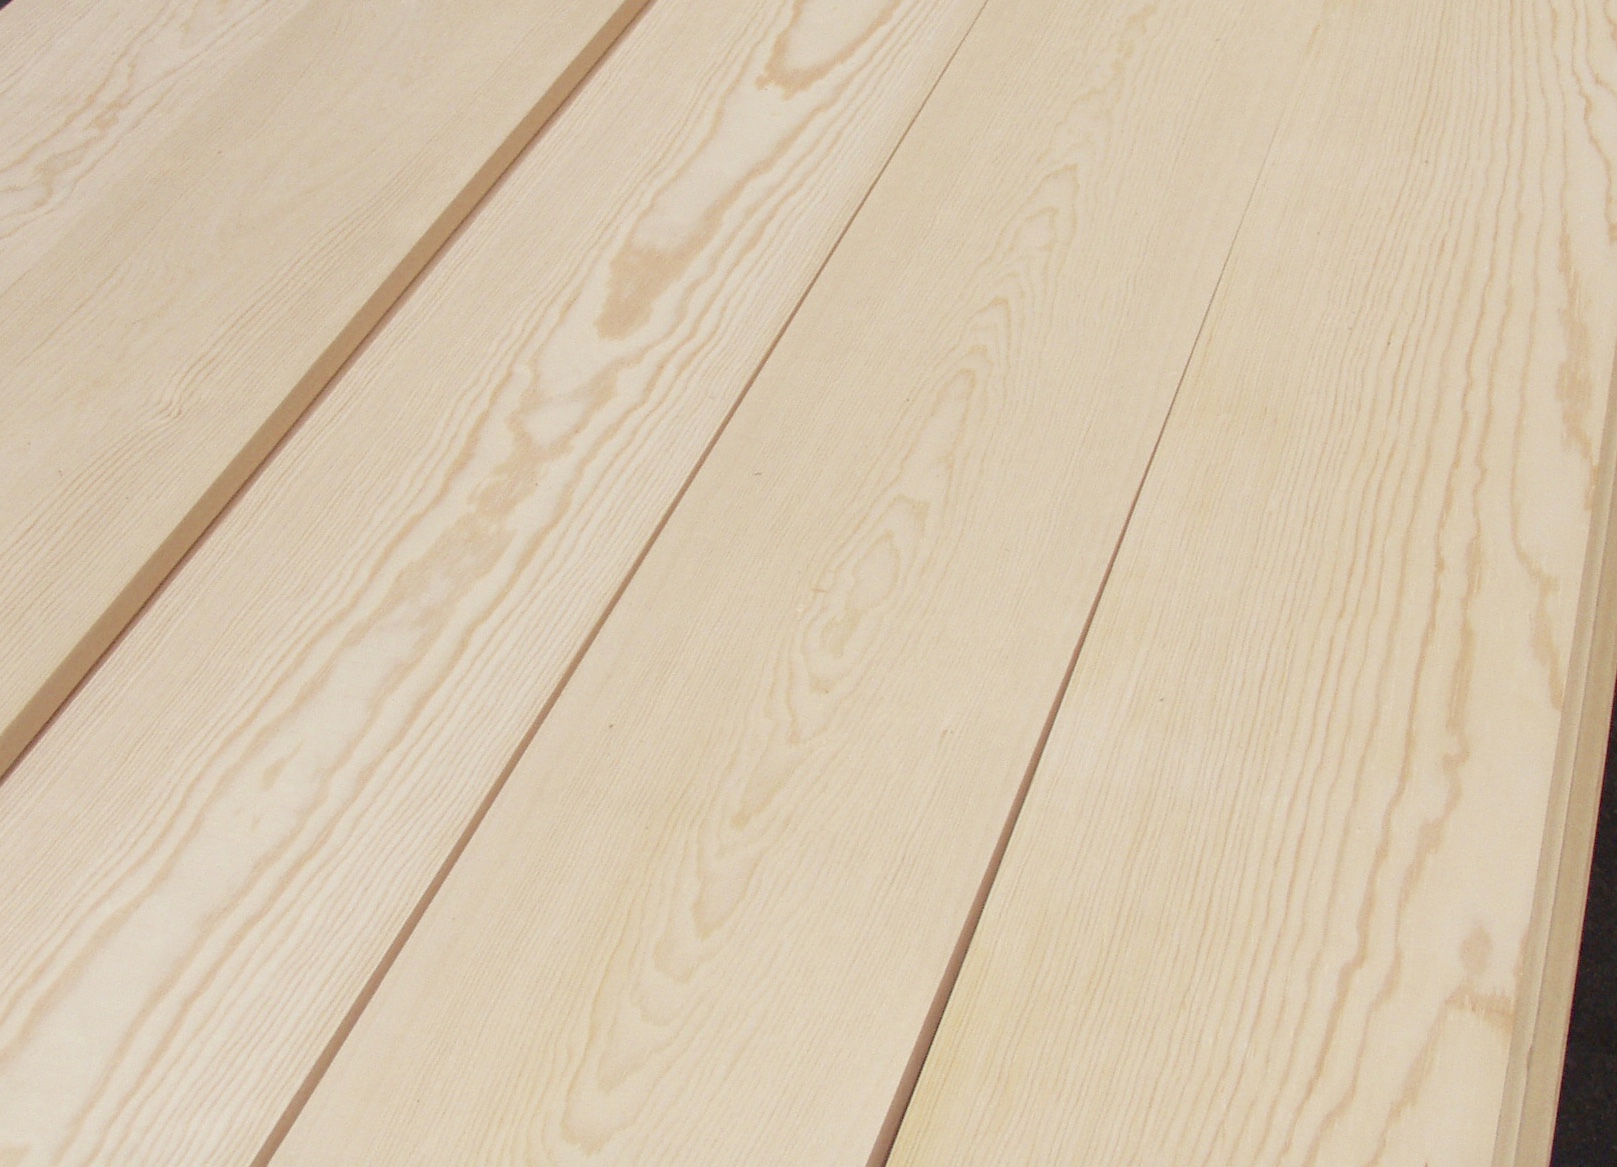 Inexpensive Wood Flooring Using Pine, Inexpensive Hardwood Floors